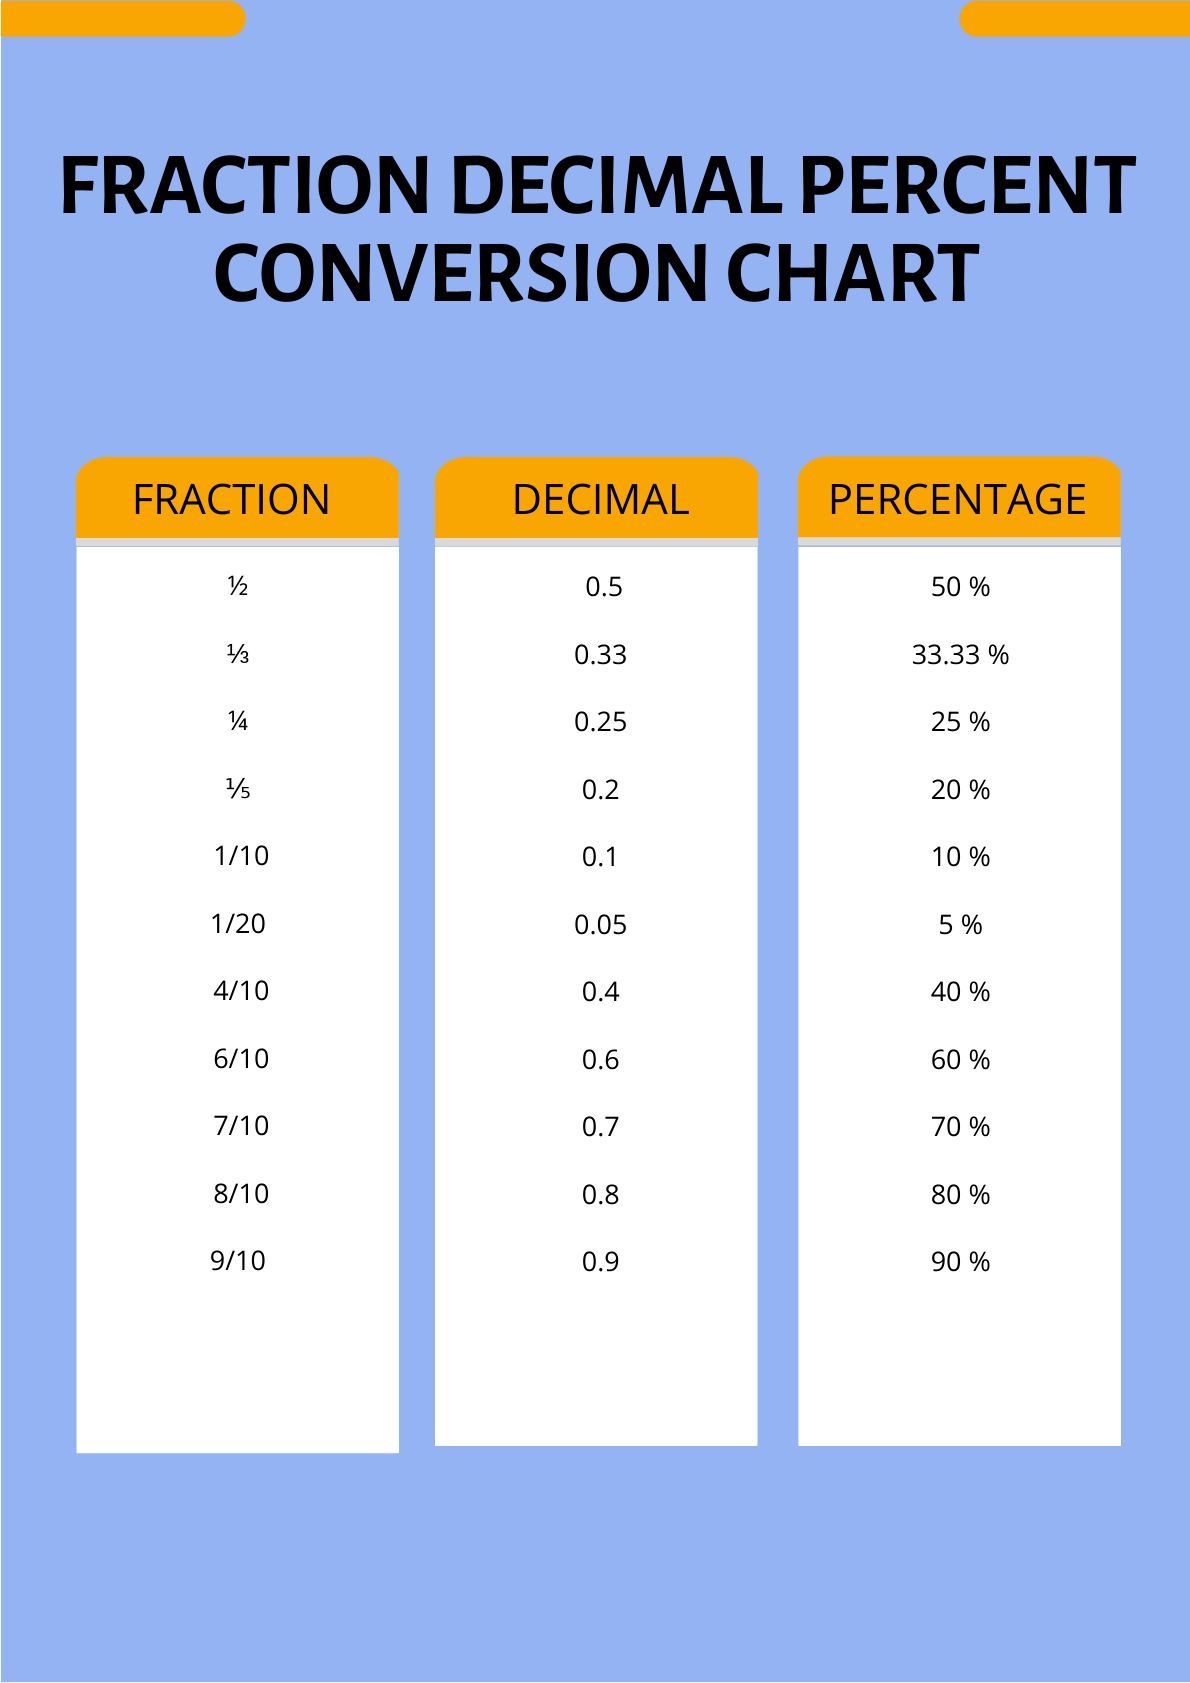 Fraction Decimal Percent Conversion Chart in PDF, Illustrator